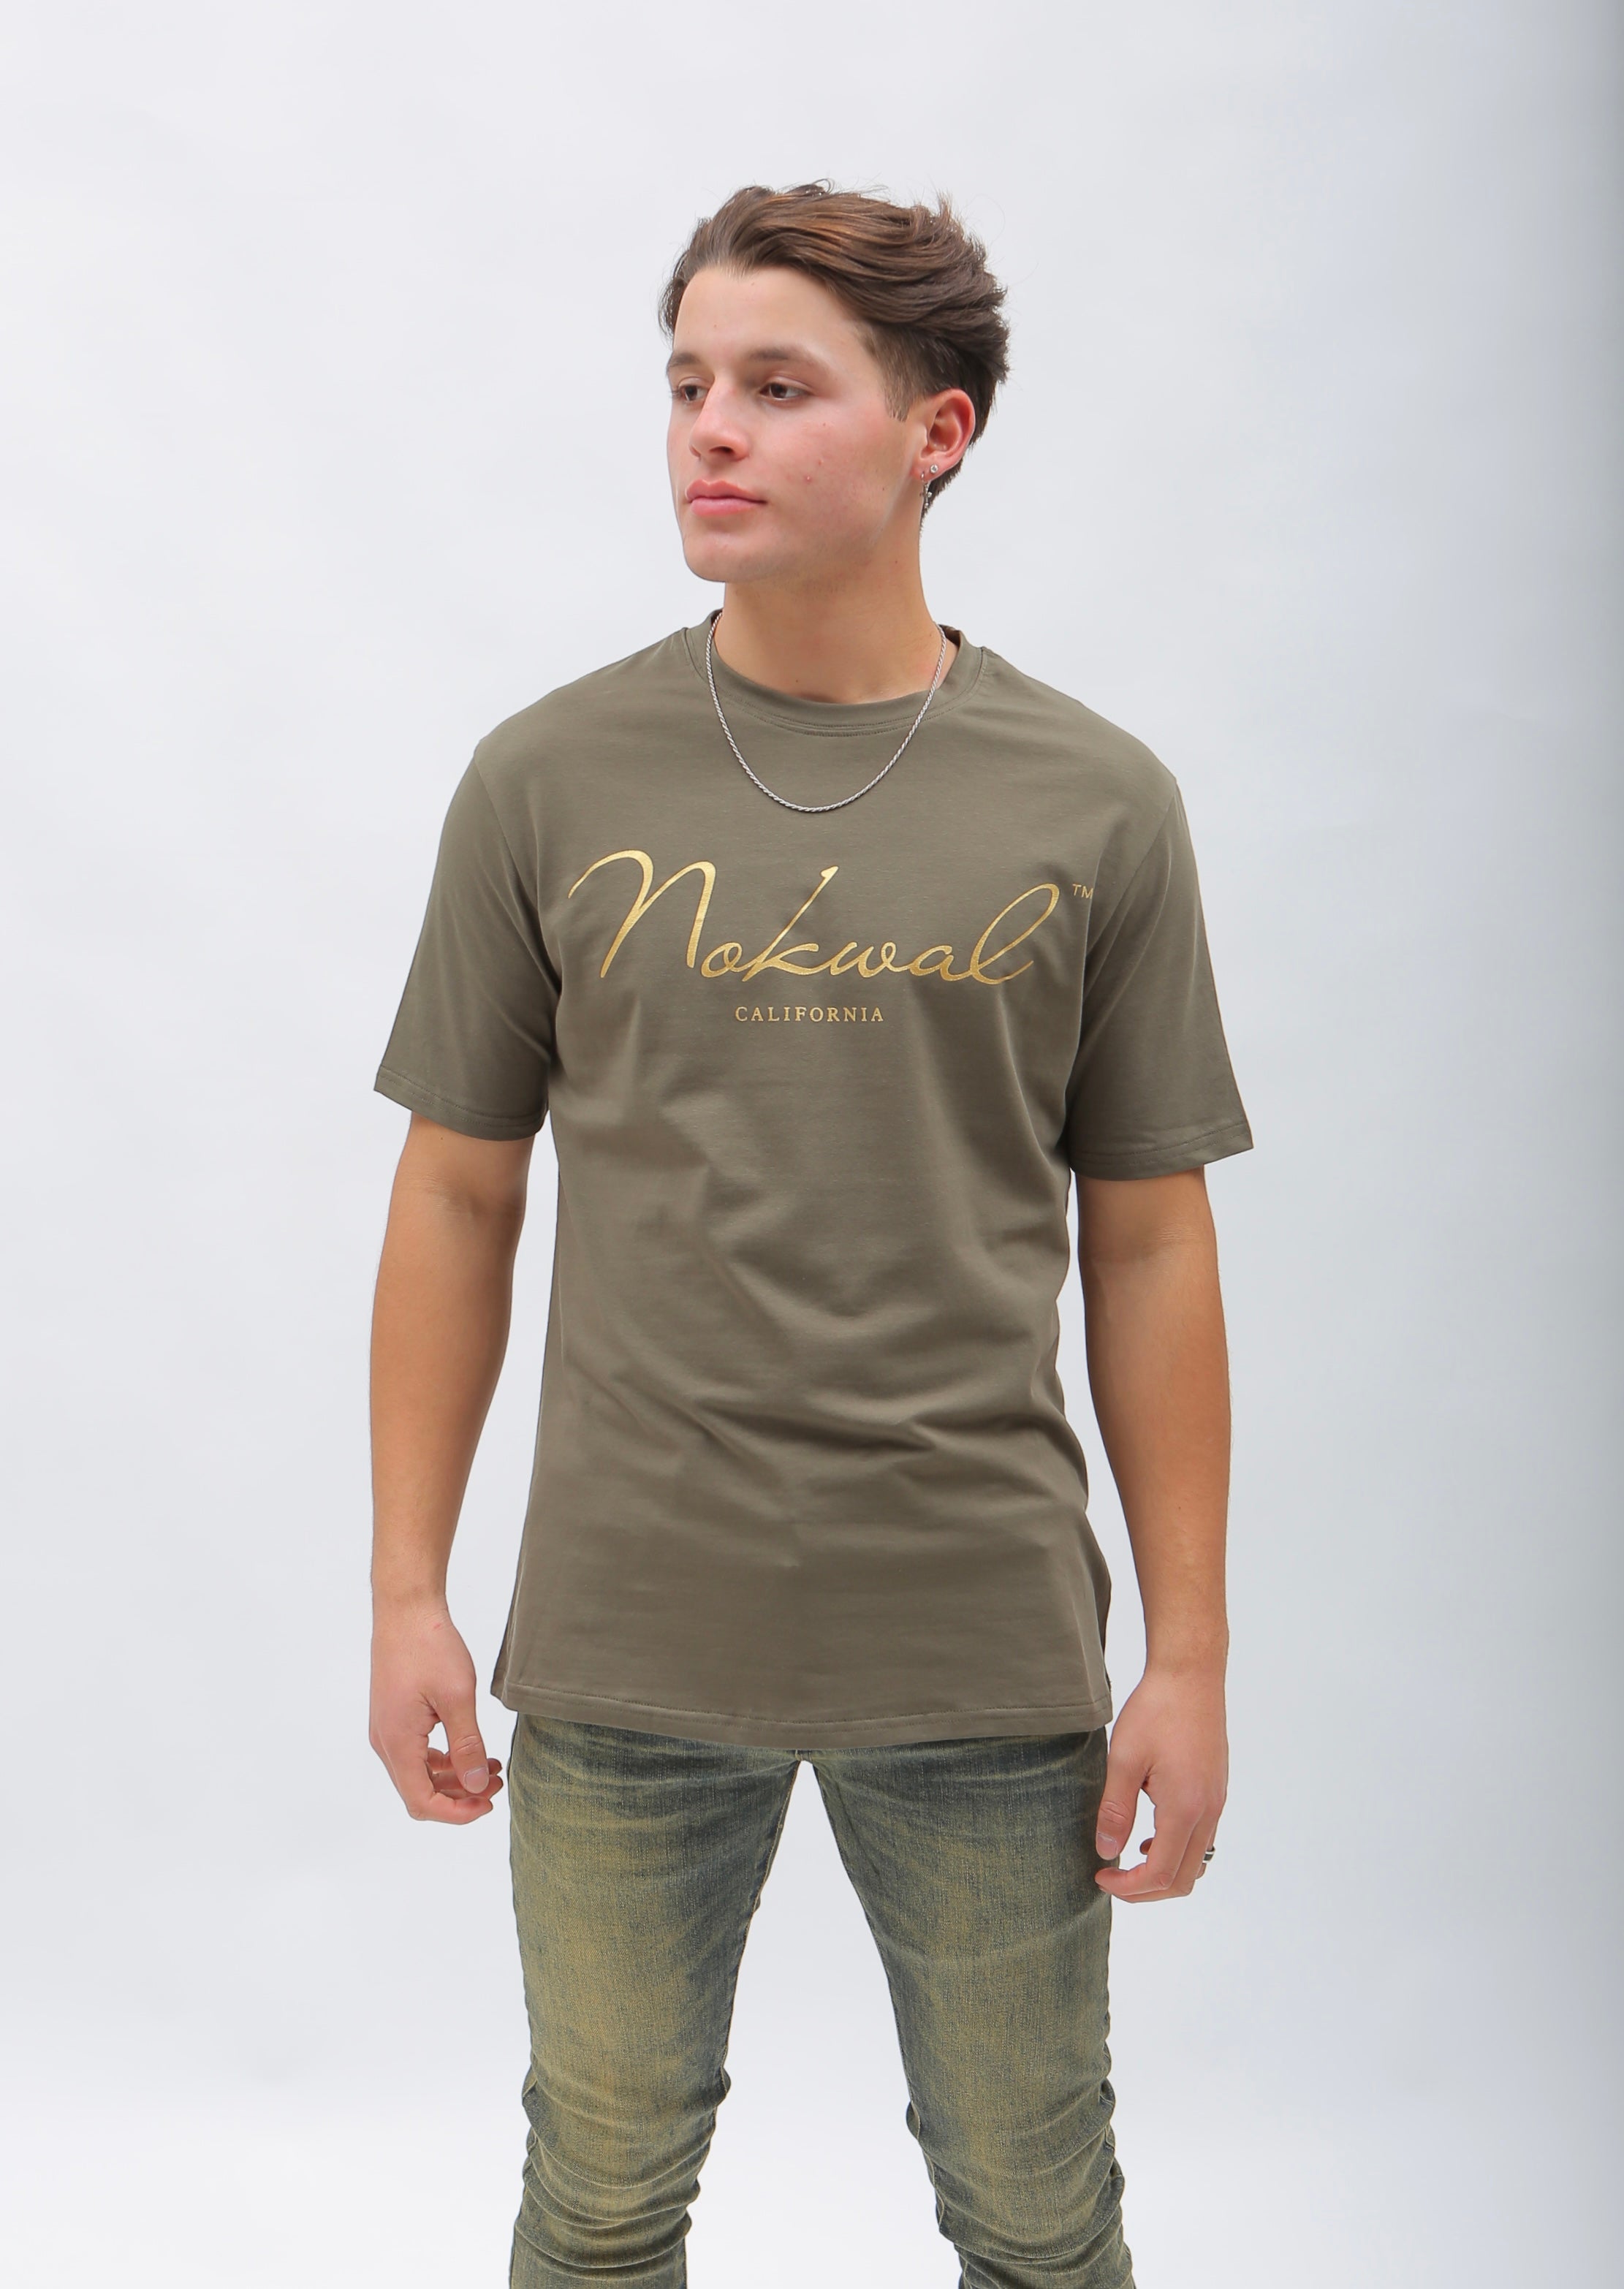 Olive T-Shirt w/ Gold Nokwal Signature